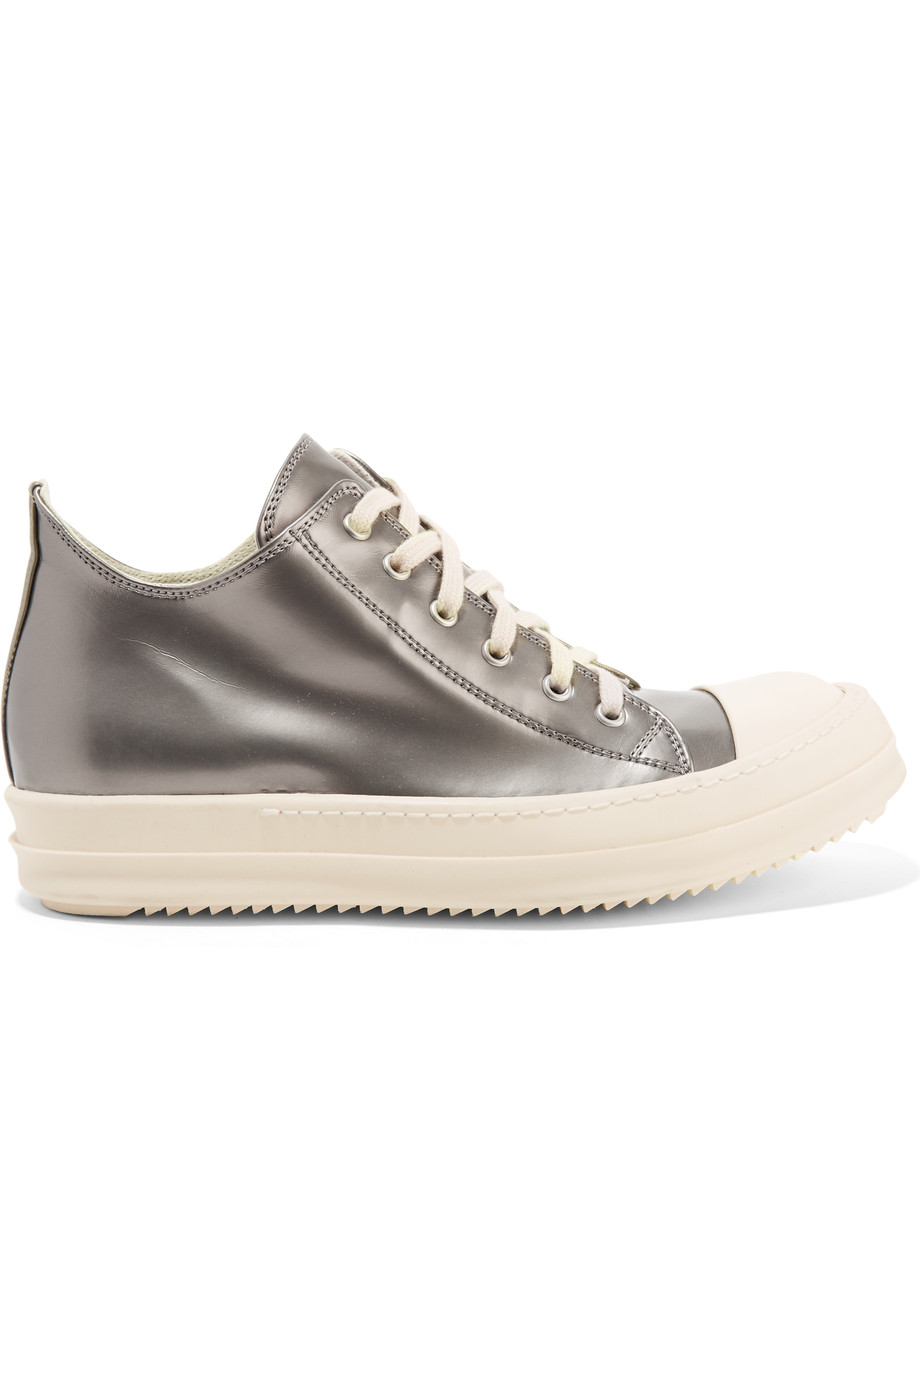 Rick Owens Metallic Patent-leather Sneakers | ModeSens